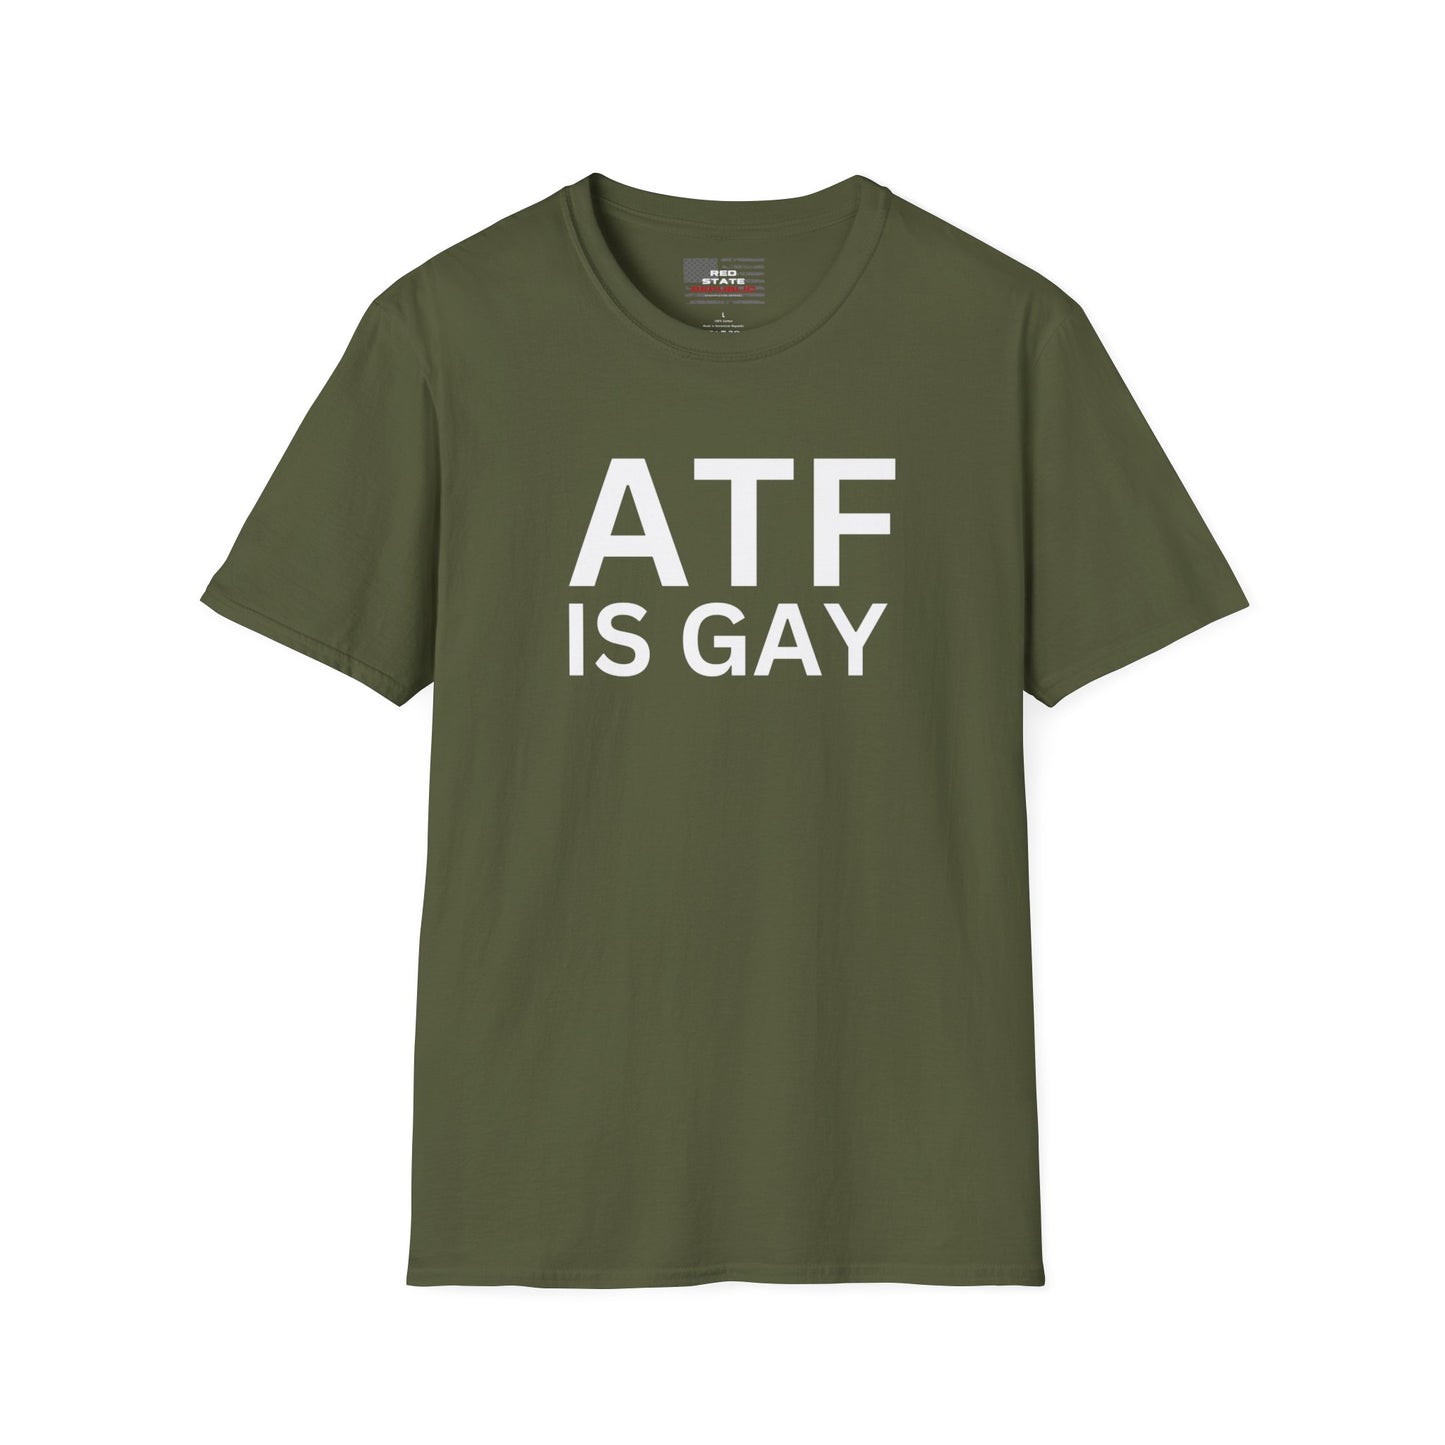 ATF is Gay Tee